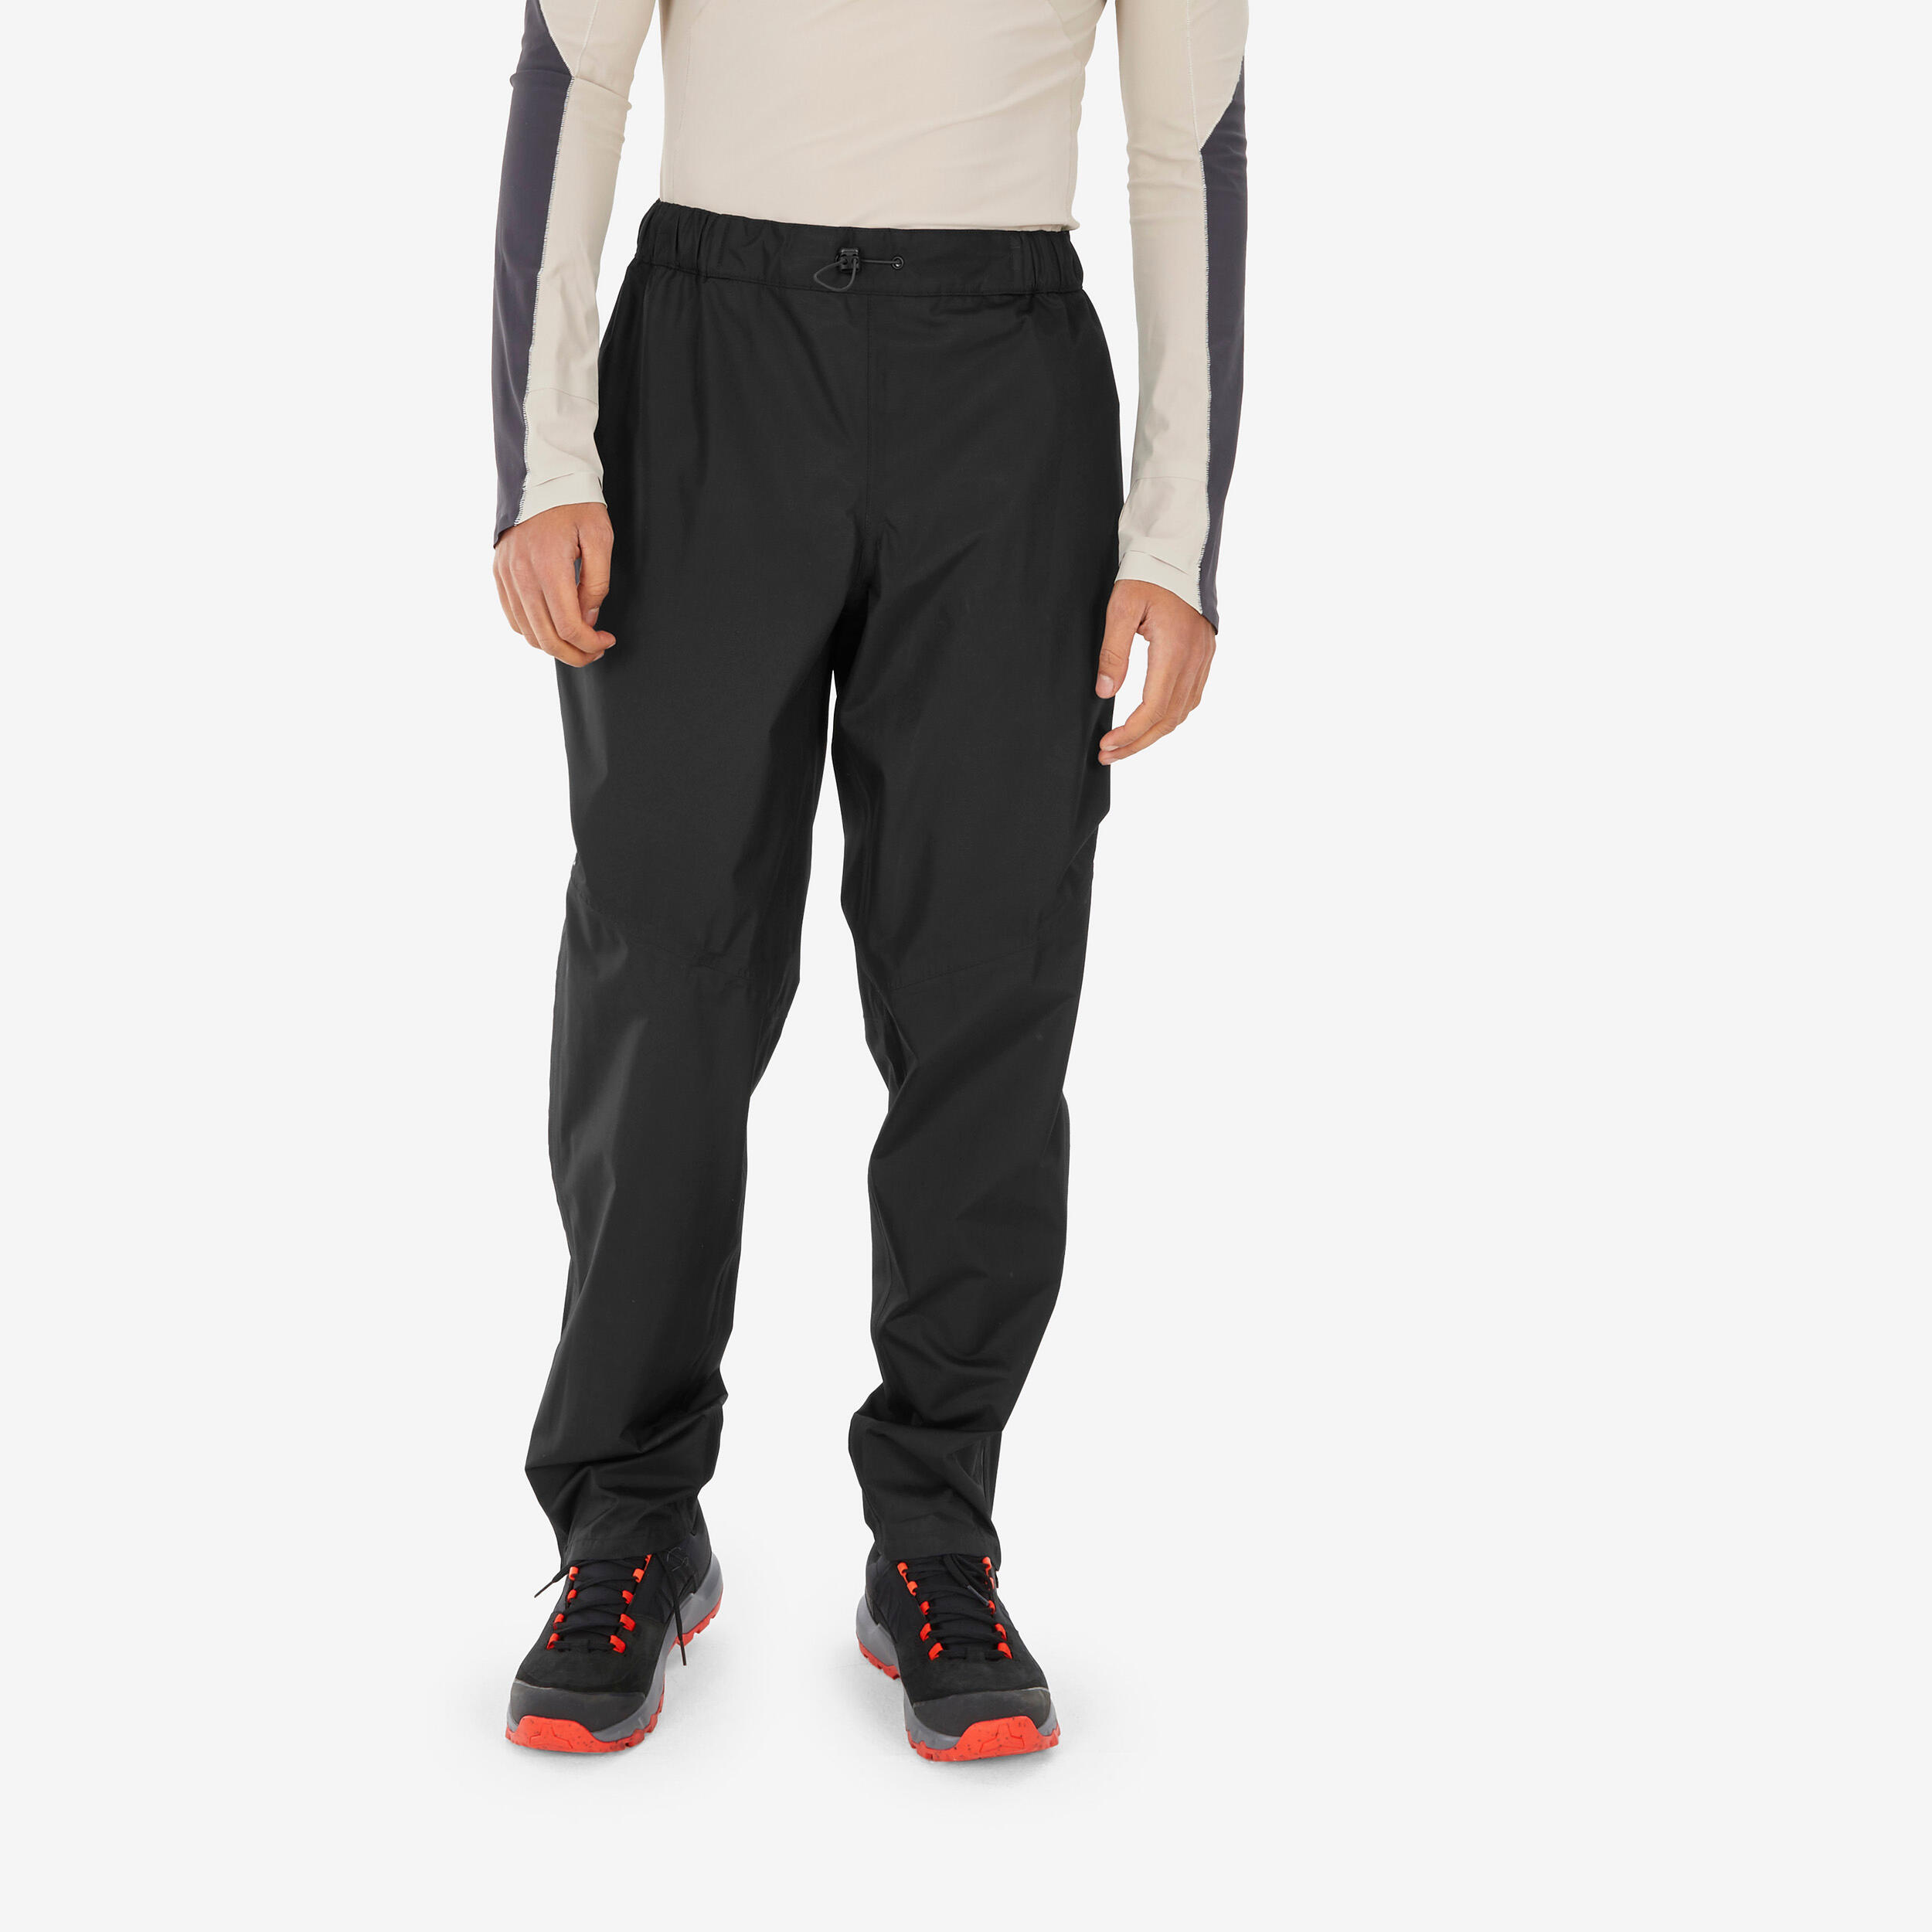 Buy Men's Hiking Trousers MH500 Grey Online | Decathlon